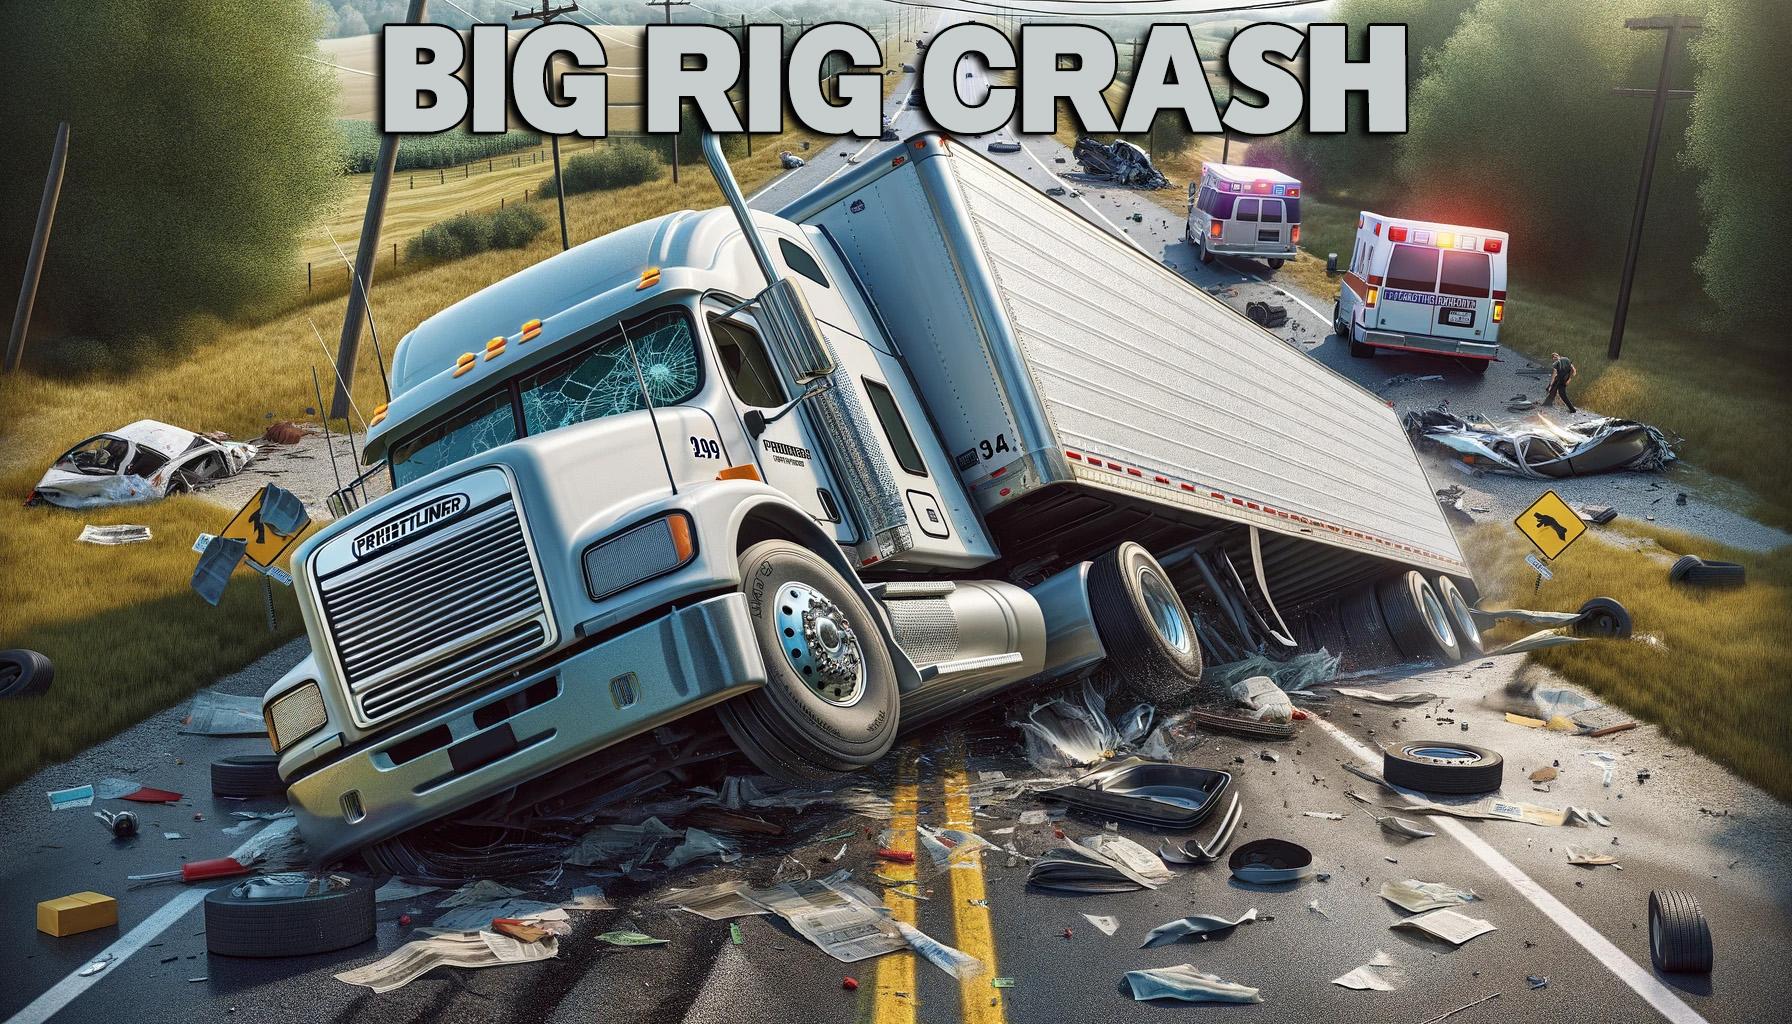 Big Rig or tractor-trailer crash news graphic